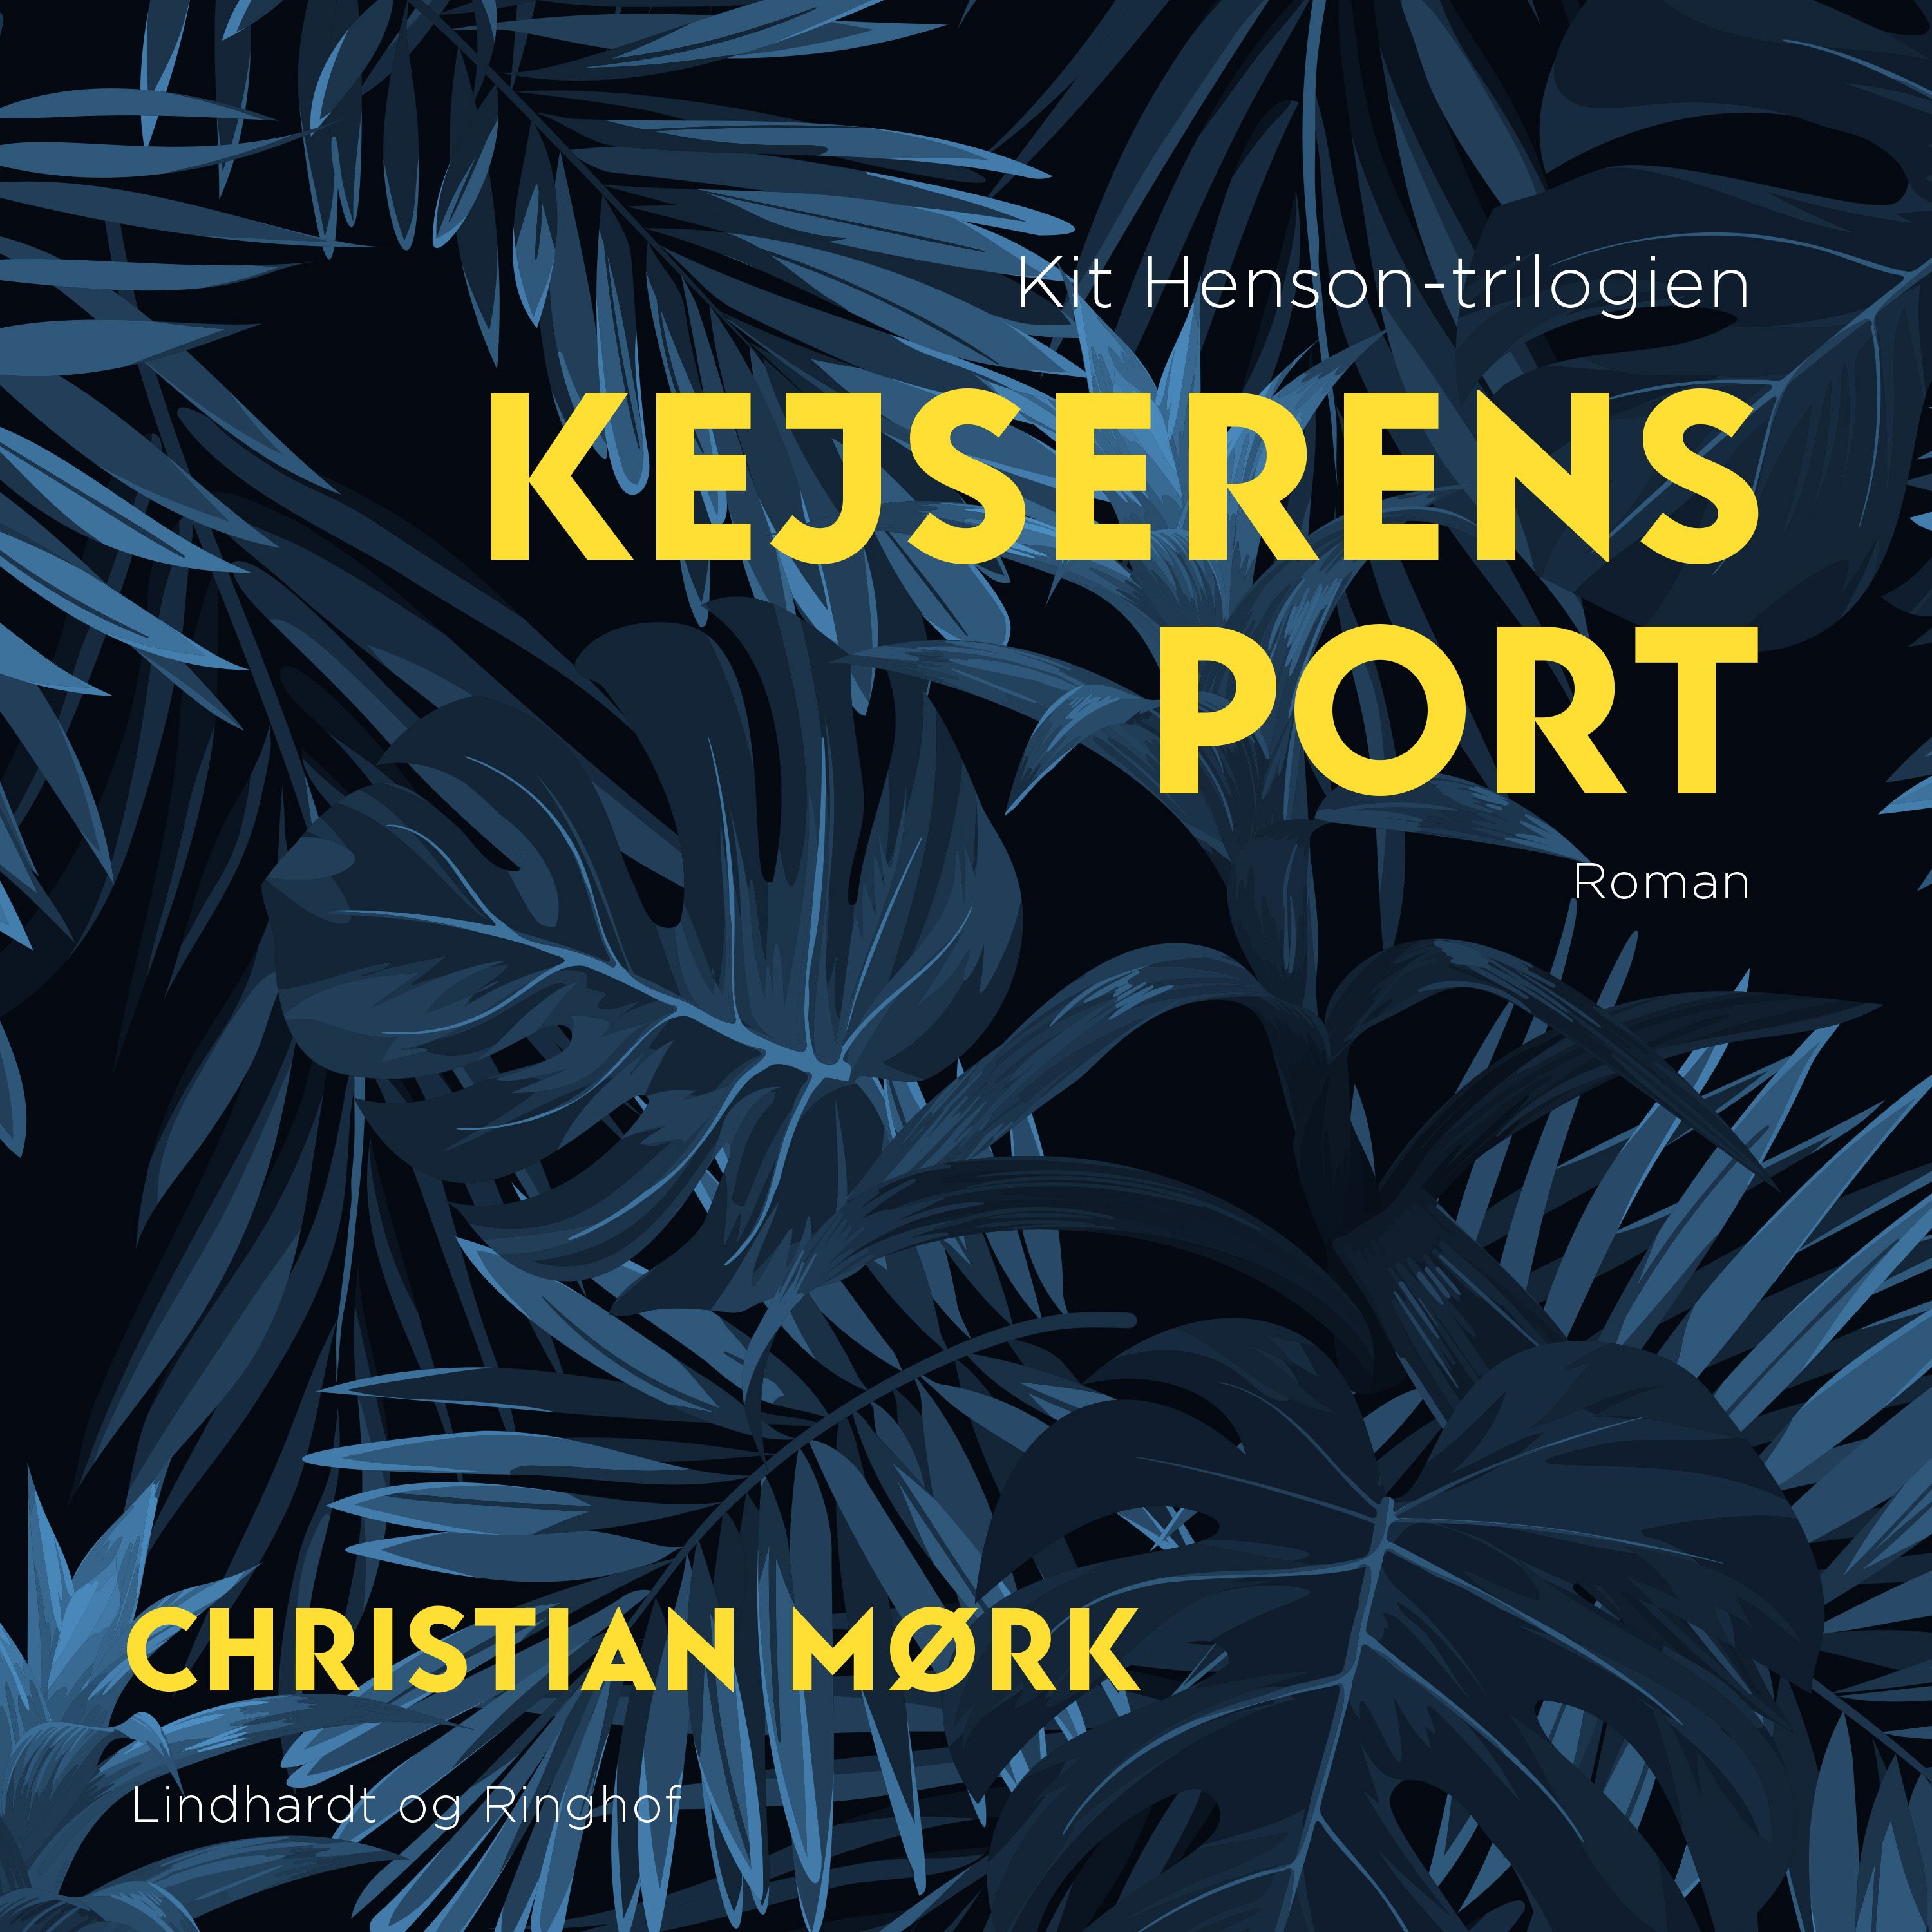 Kejserens port, ljudbok av Christian Mørk